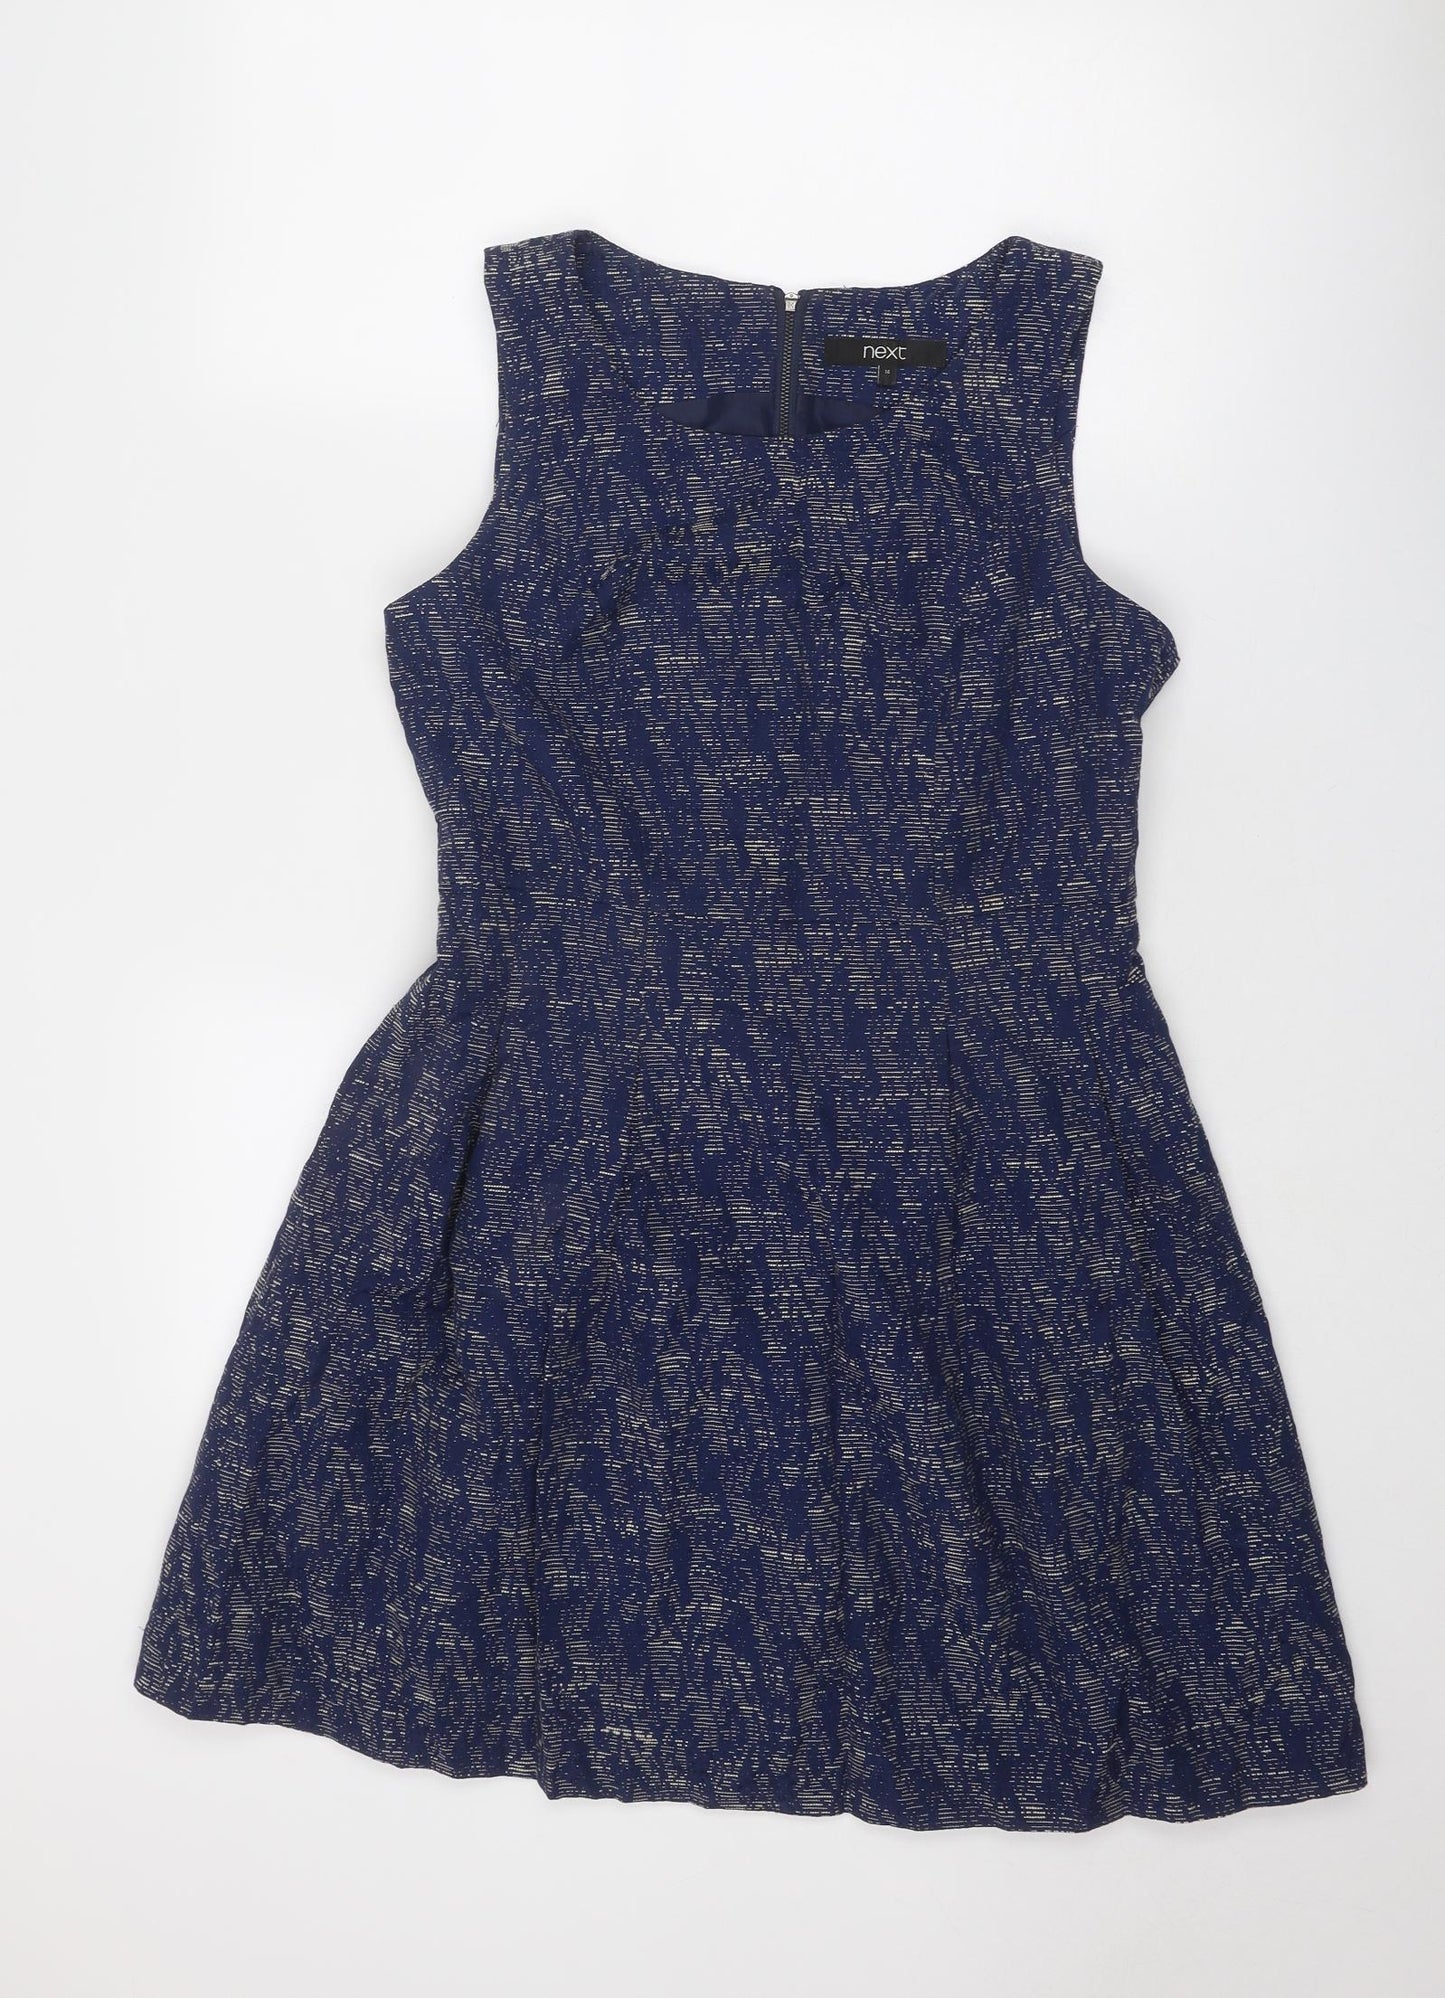 NEXT Womens Blue Geometric Cotton Skater Dress Size 14 Round Neck Zip